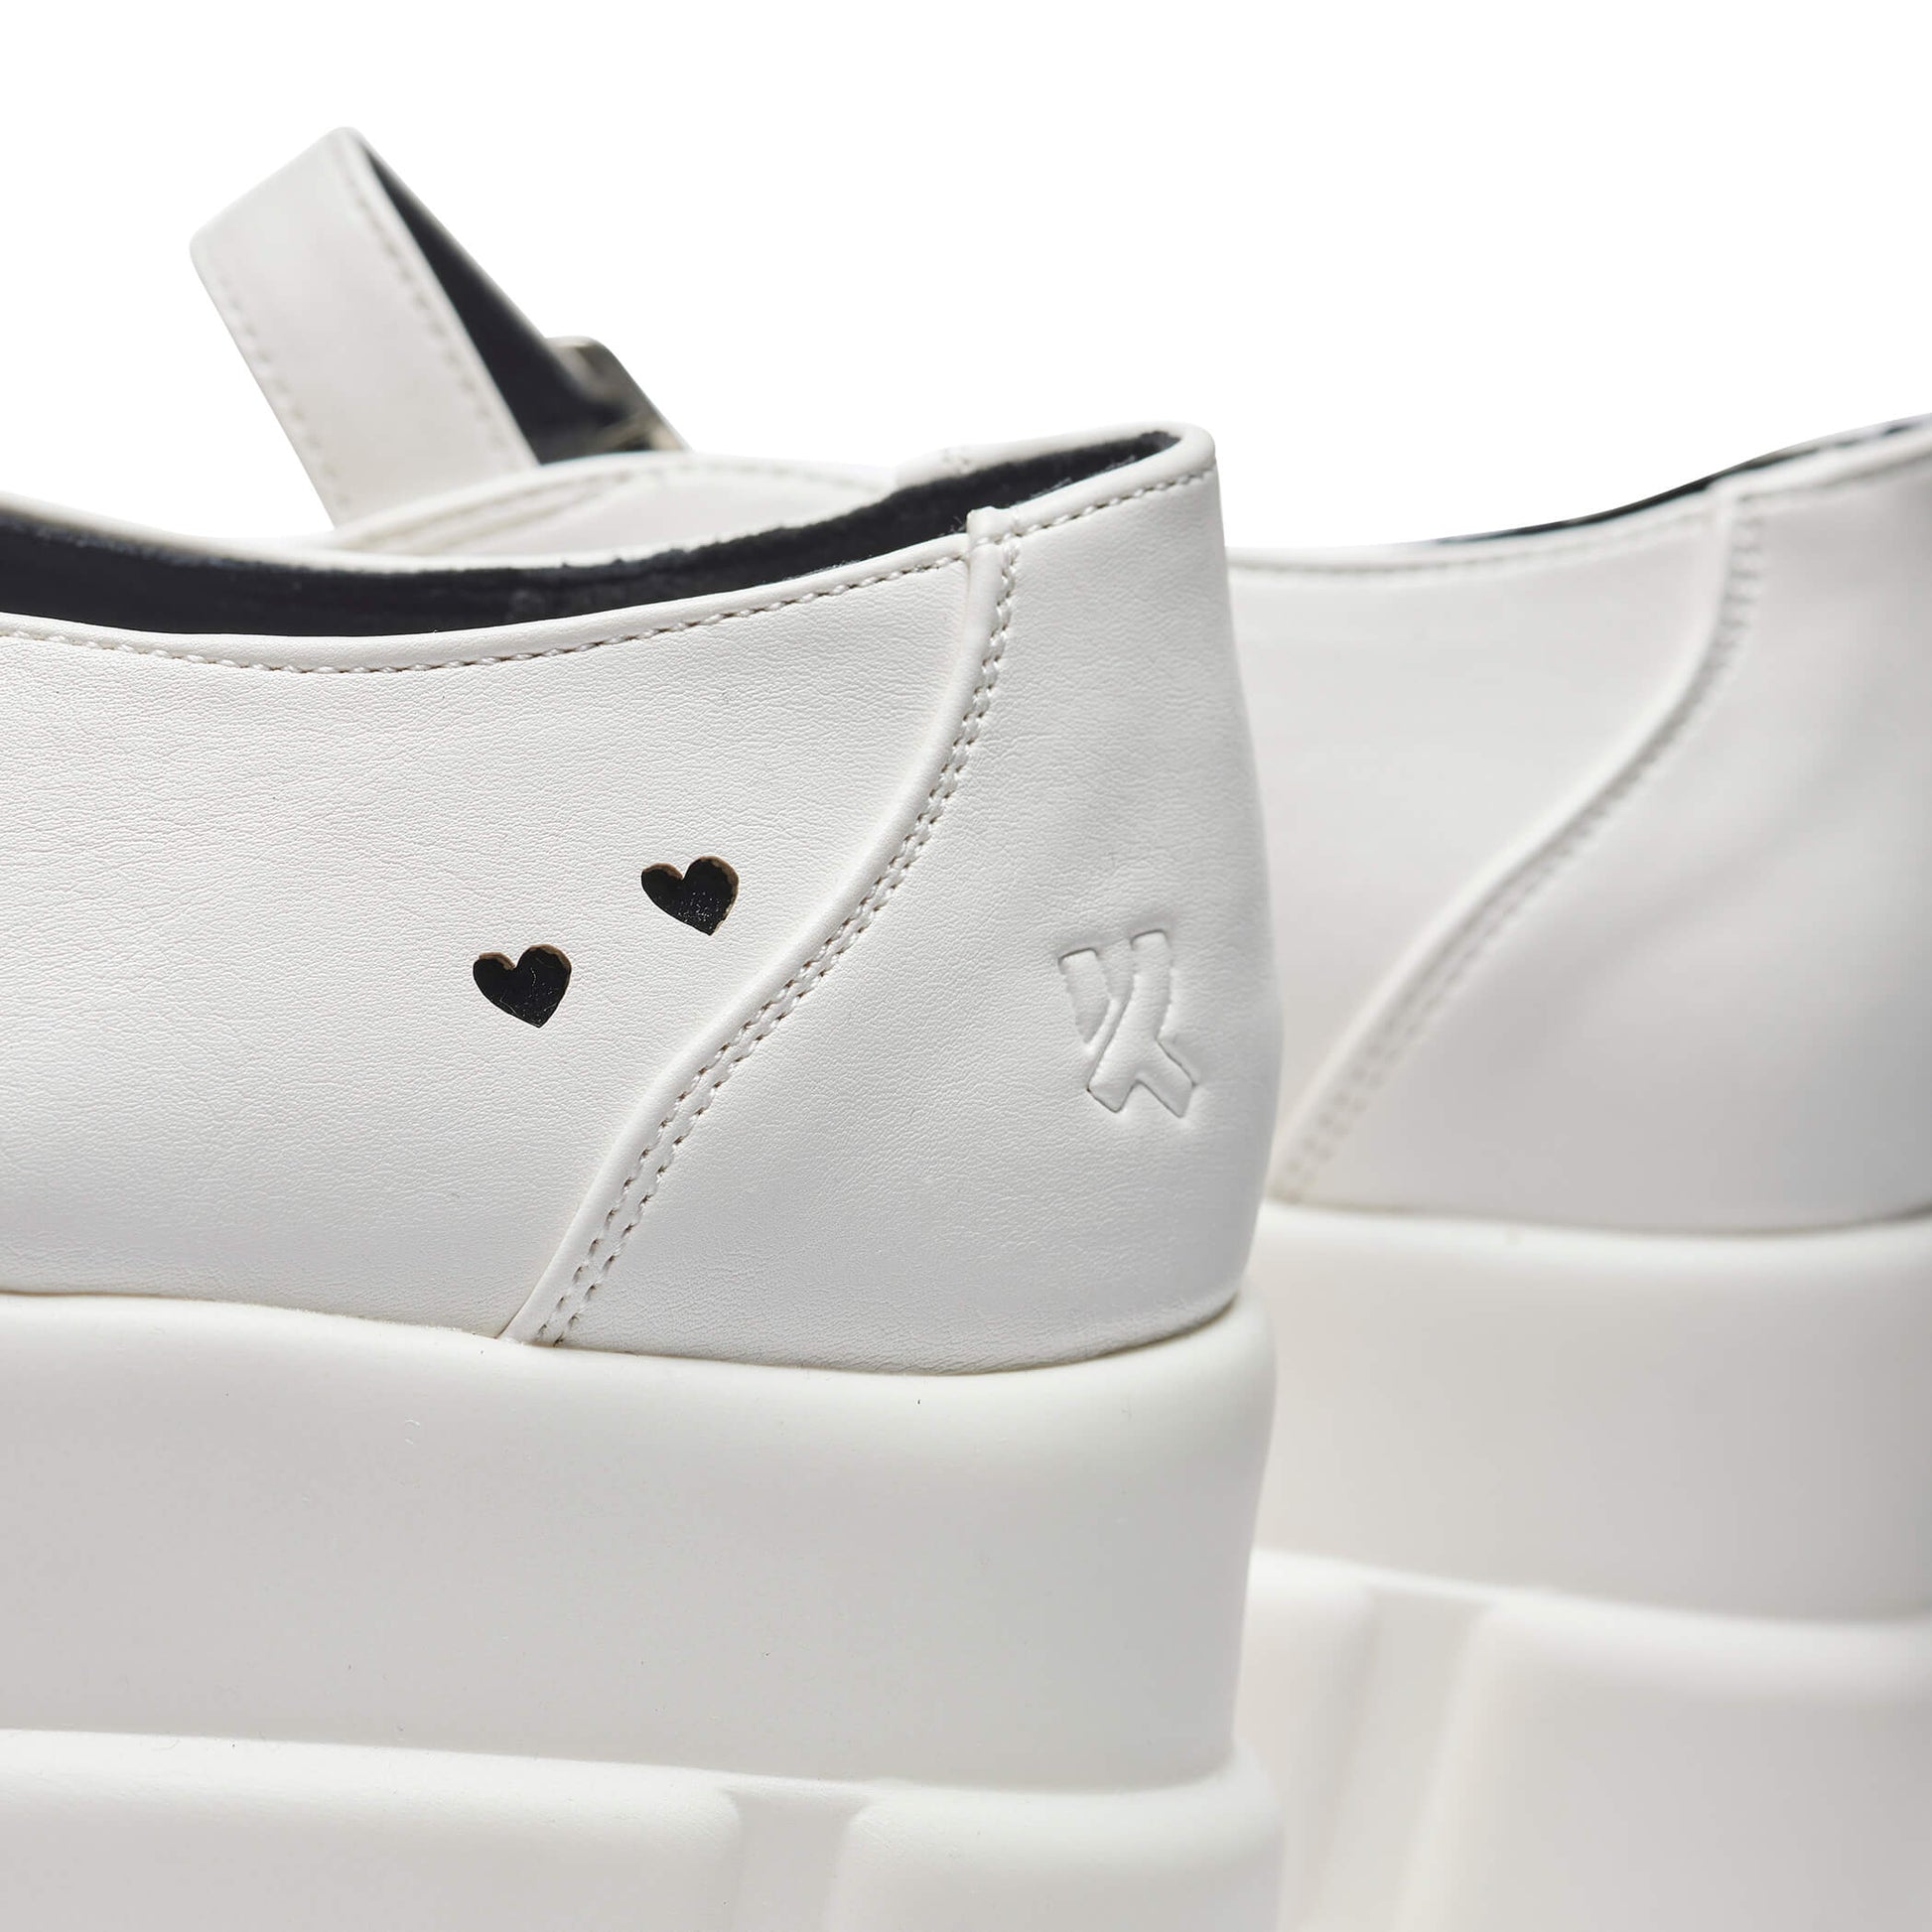 Harmony Heart Mary Jane Shoes - White - Shoes - KOI Footwear - White - Back Detail